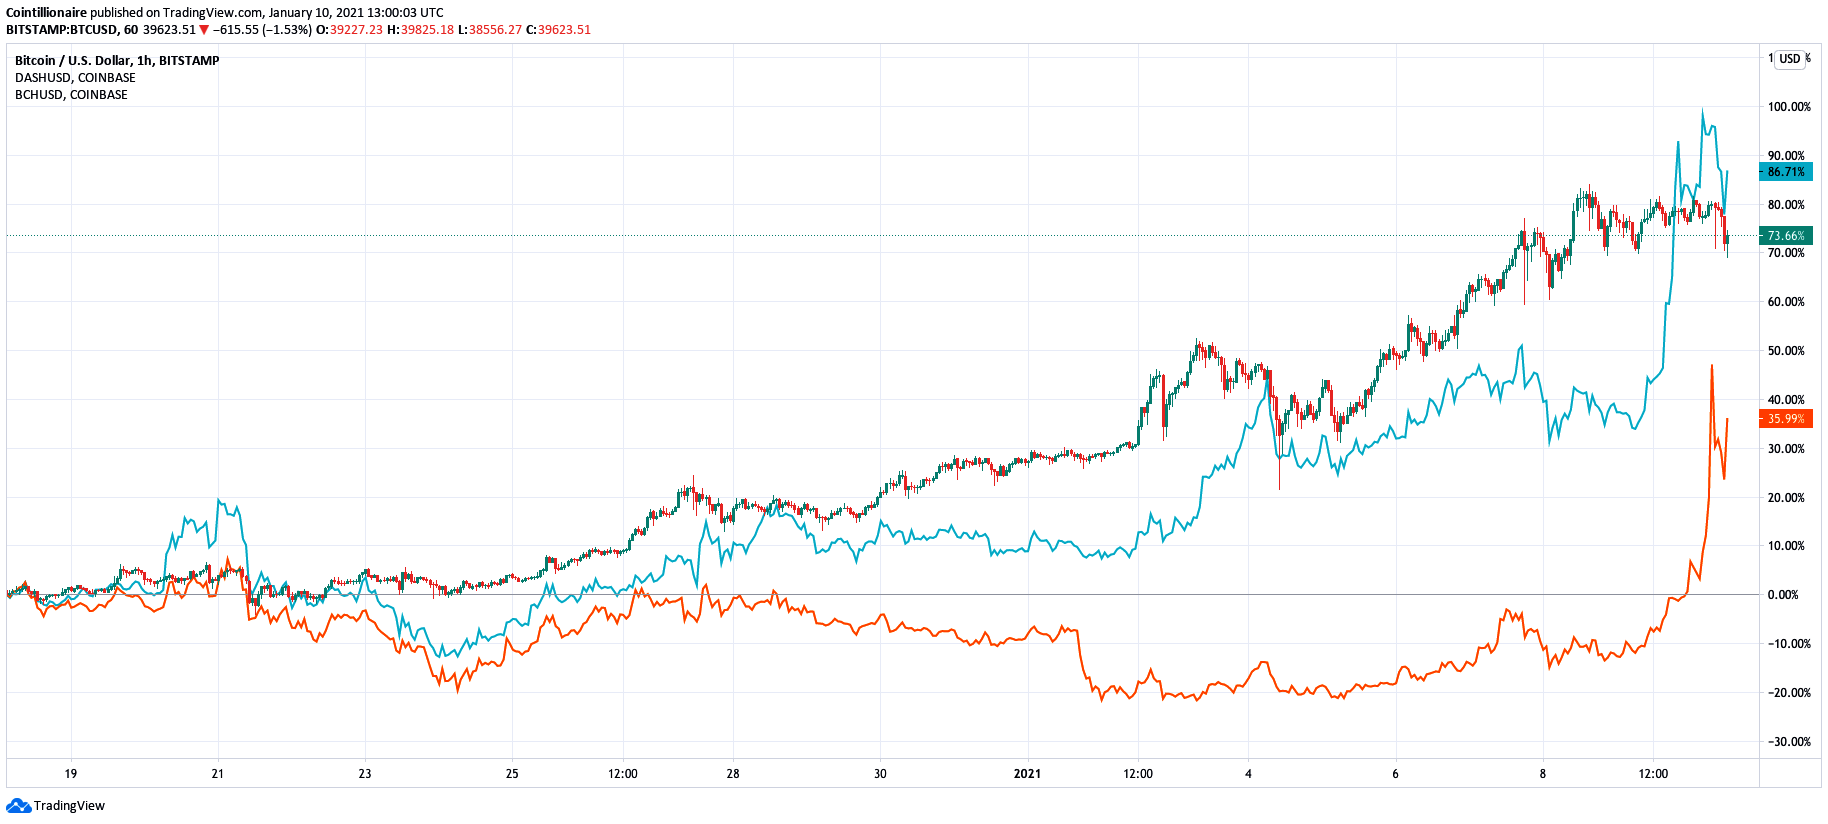 BTC/USD 1-hour candle chart vs. DASH/USD (orange), BCH/USD (blue). Source: Tradingview